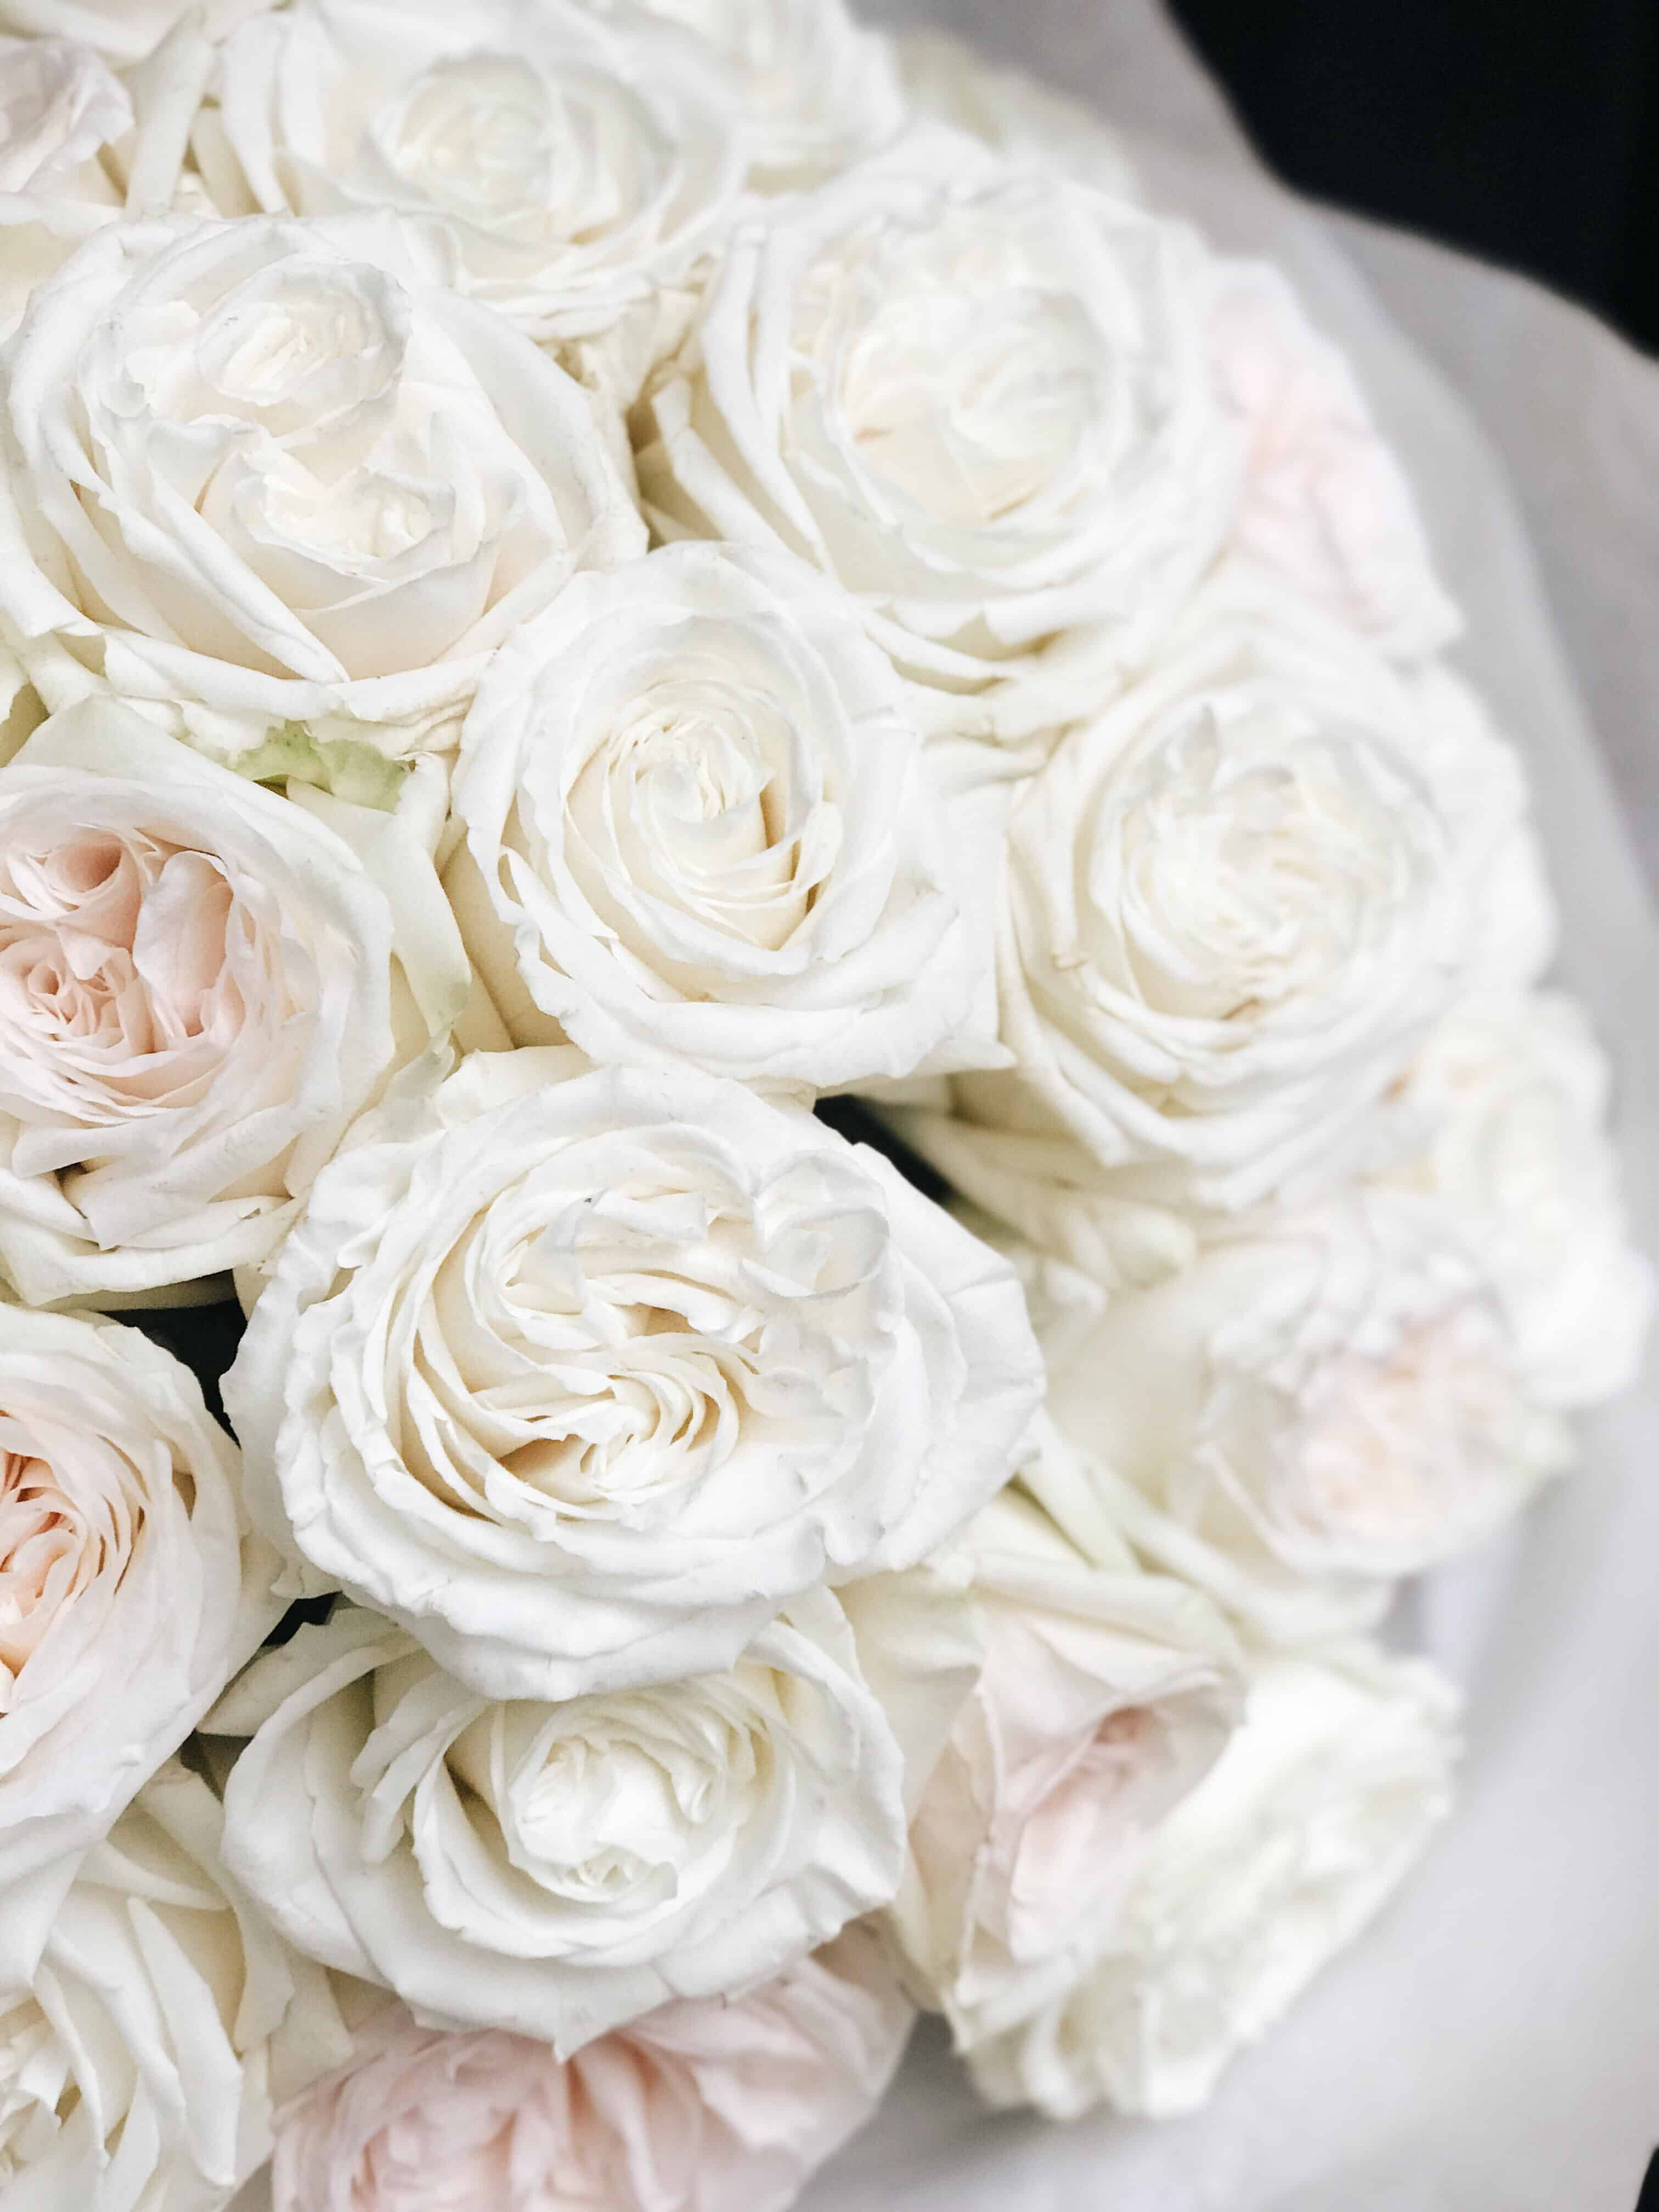 Белый тет. Белые розы. Цветы белые розы. Красивые белые розы. Белые розочки.